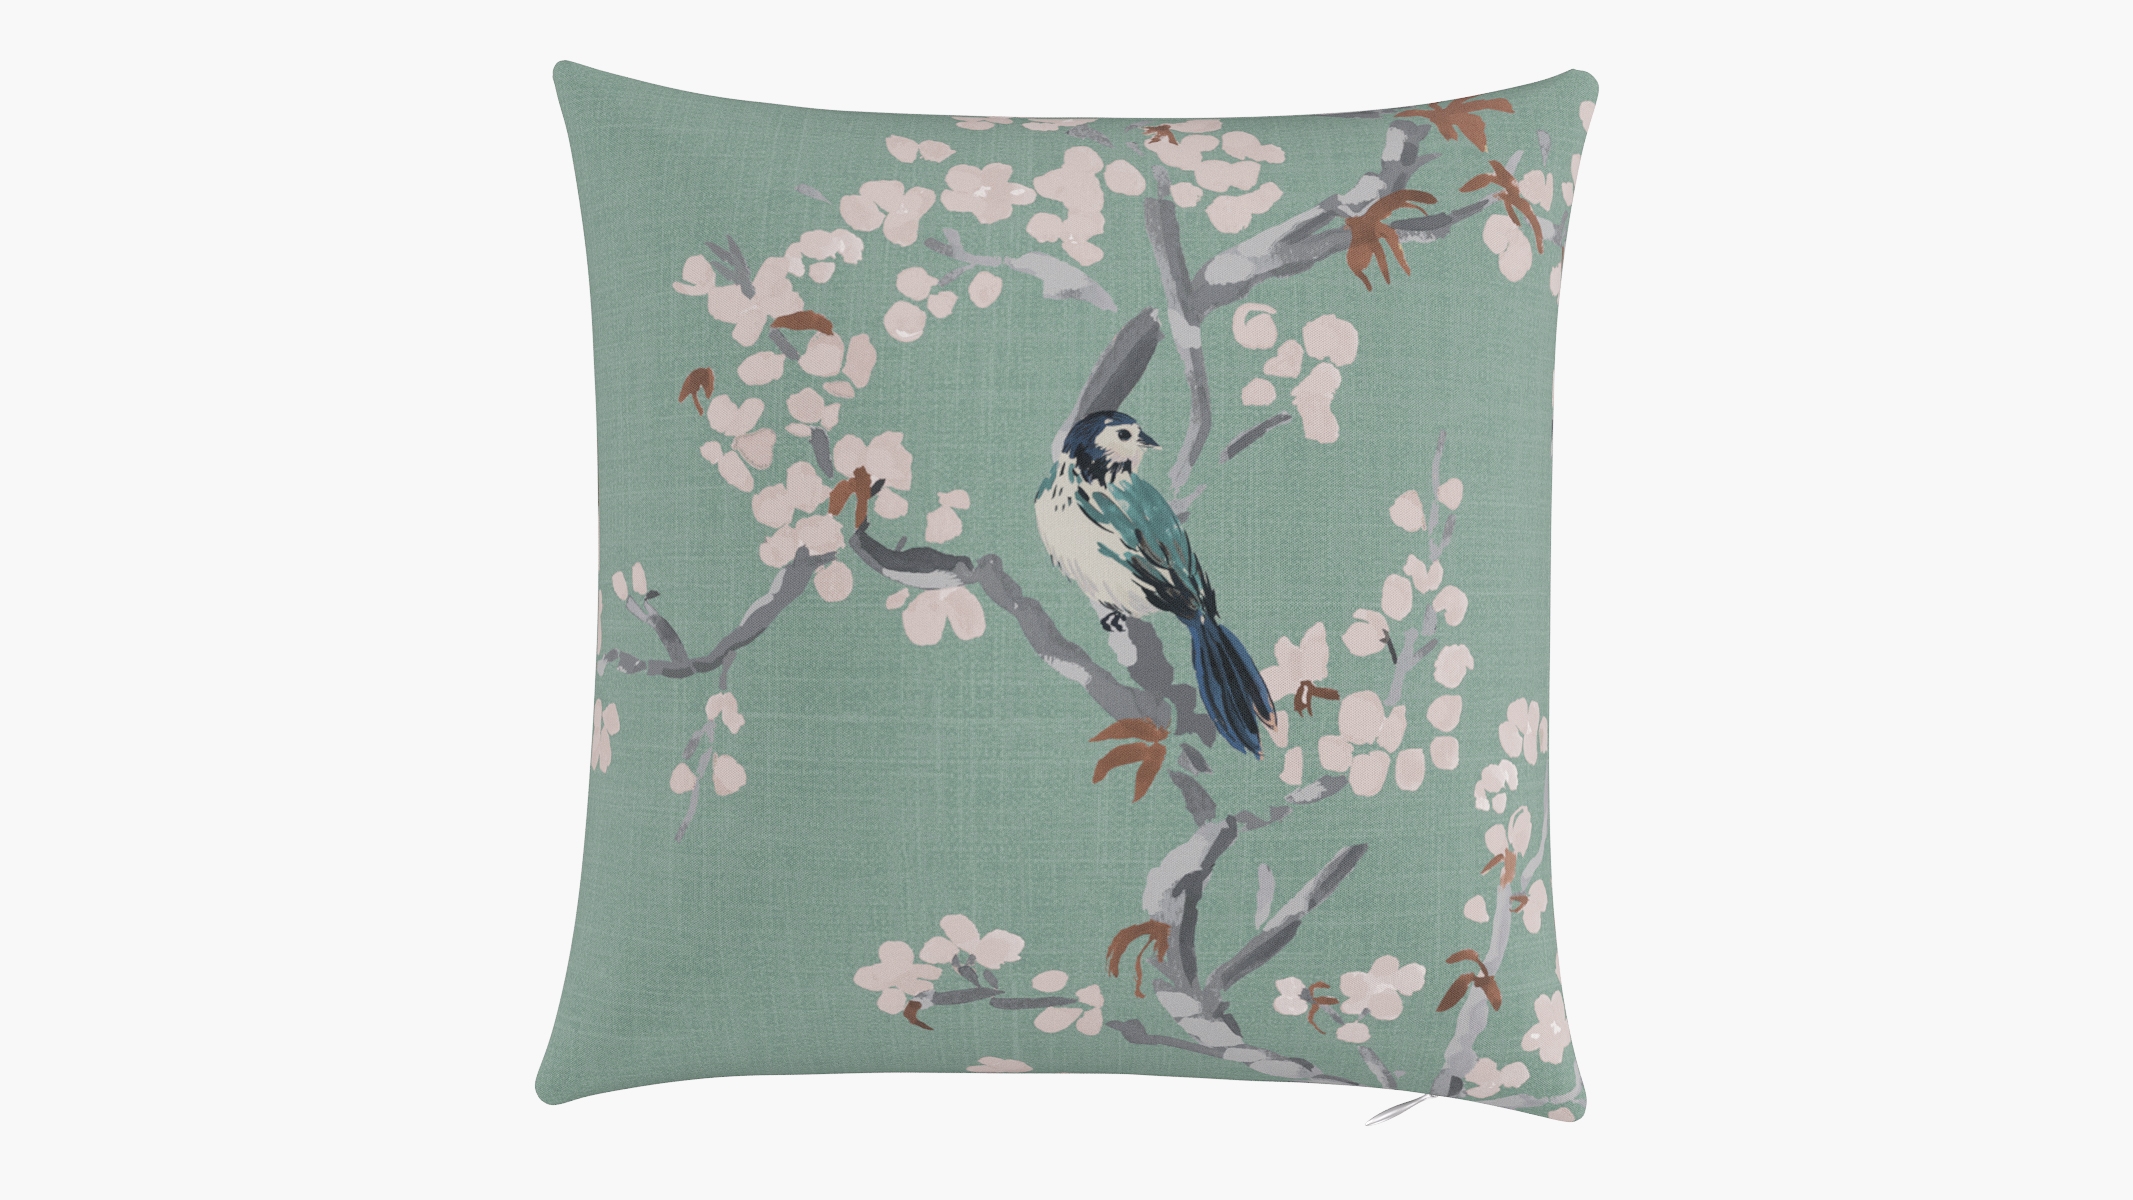 Throw Pillow 16", Mint Cherry Blossom, 16" x 16" - Image 0